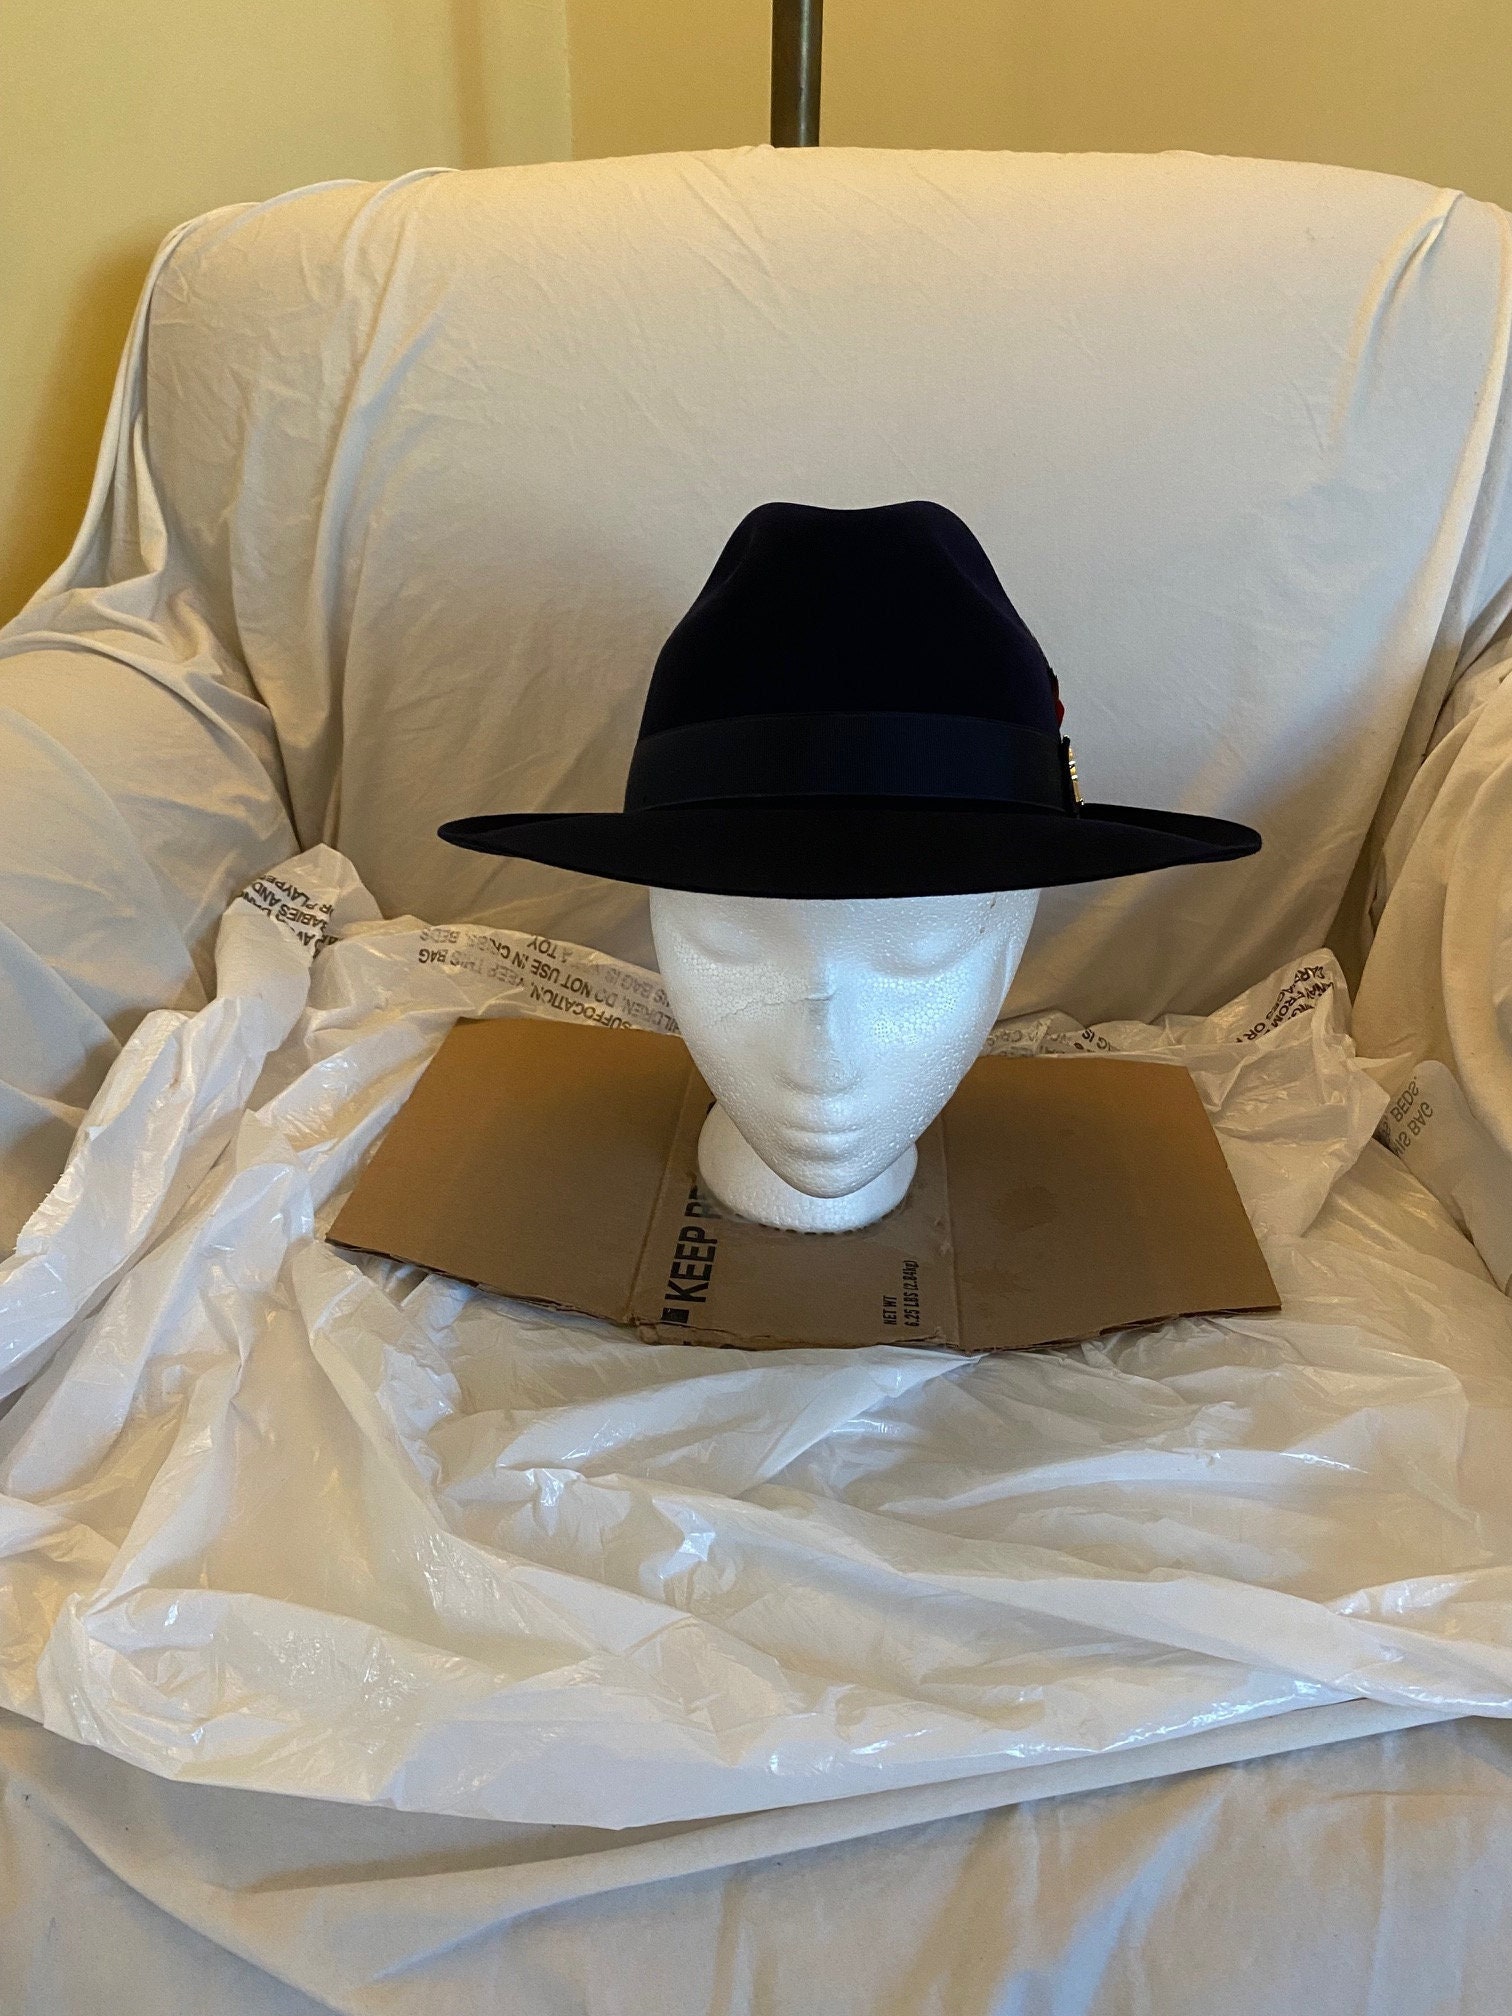 Awesome Custom Made Vintage Thomas J Hirt hat Maker for the Movies 10X Fur  Felt-50% Beaver Buckaroo/vaquero Black Size 7 56cm 